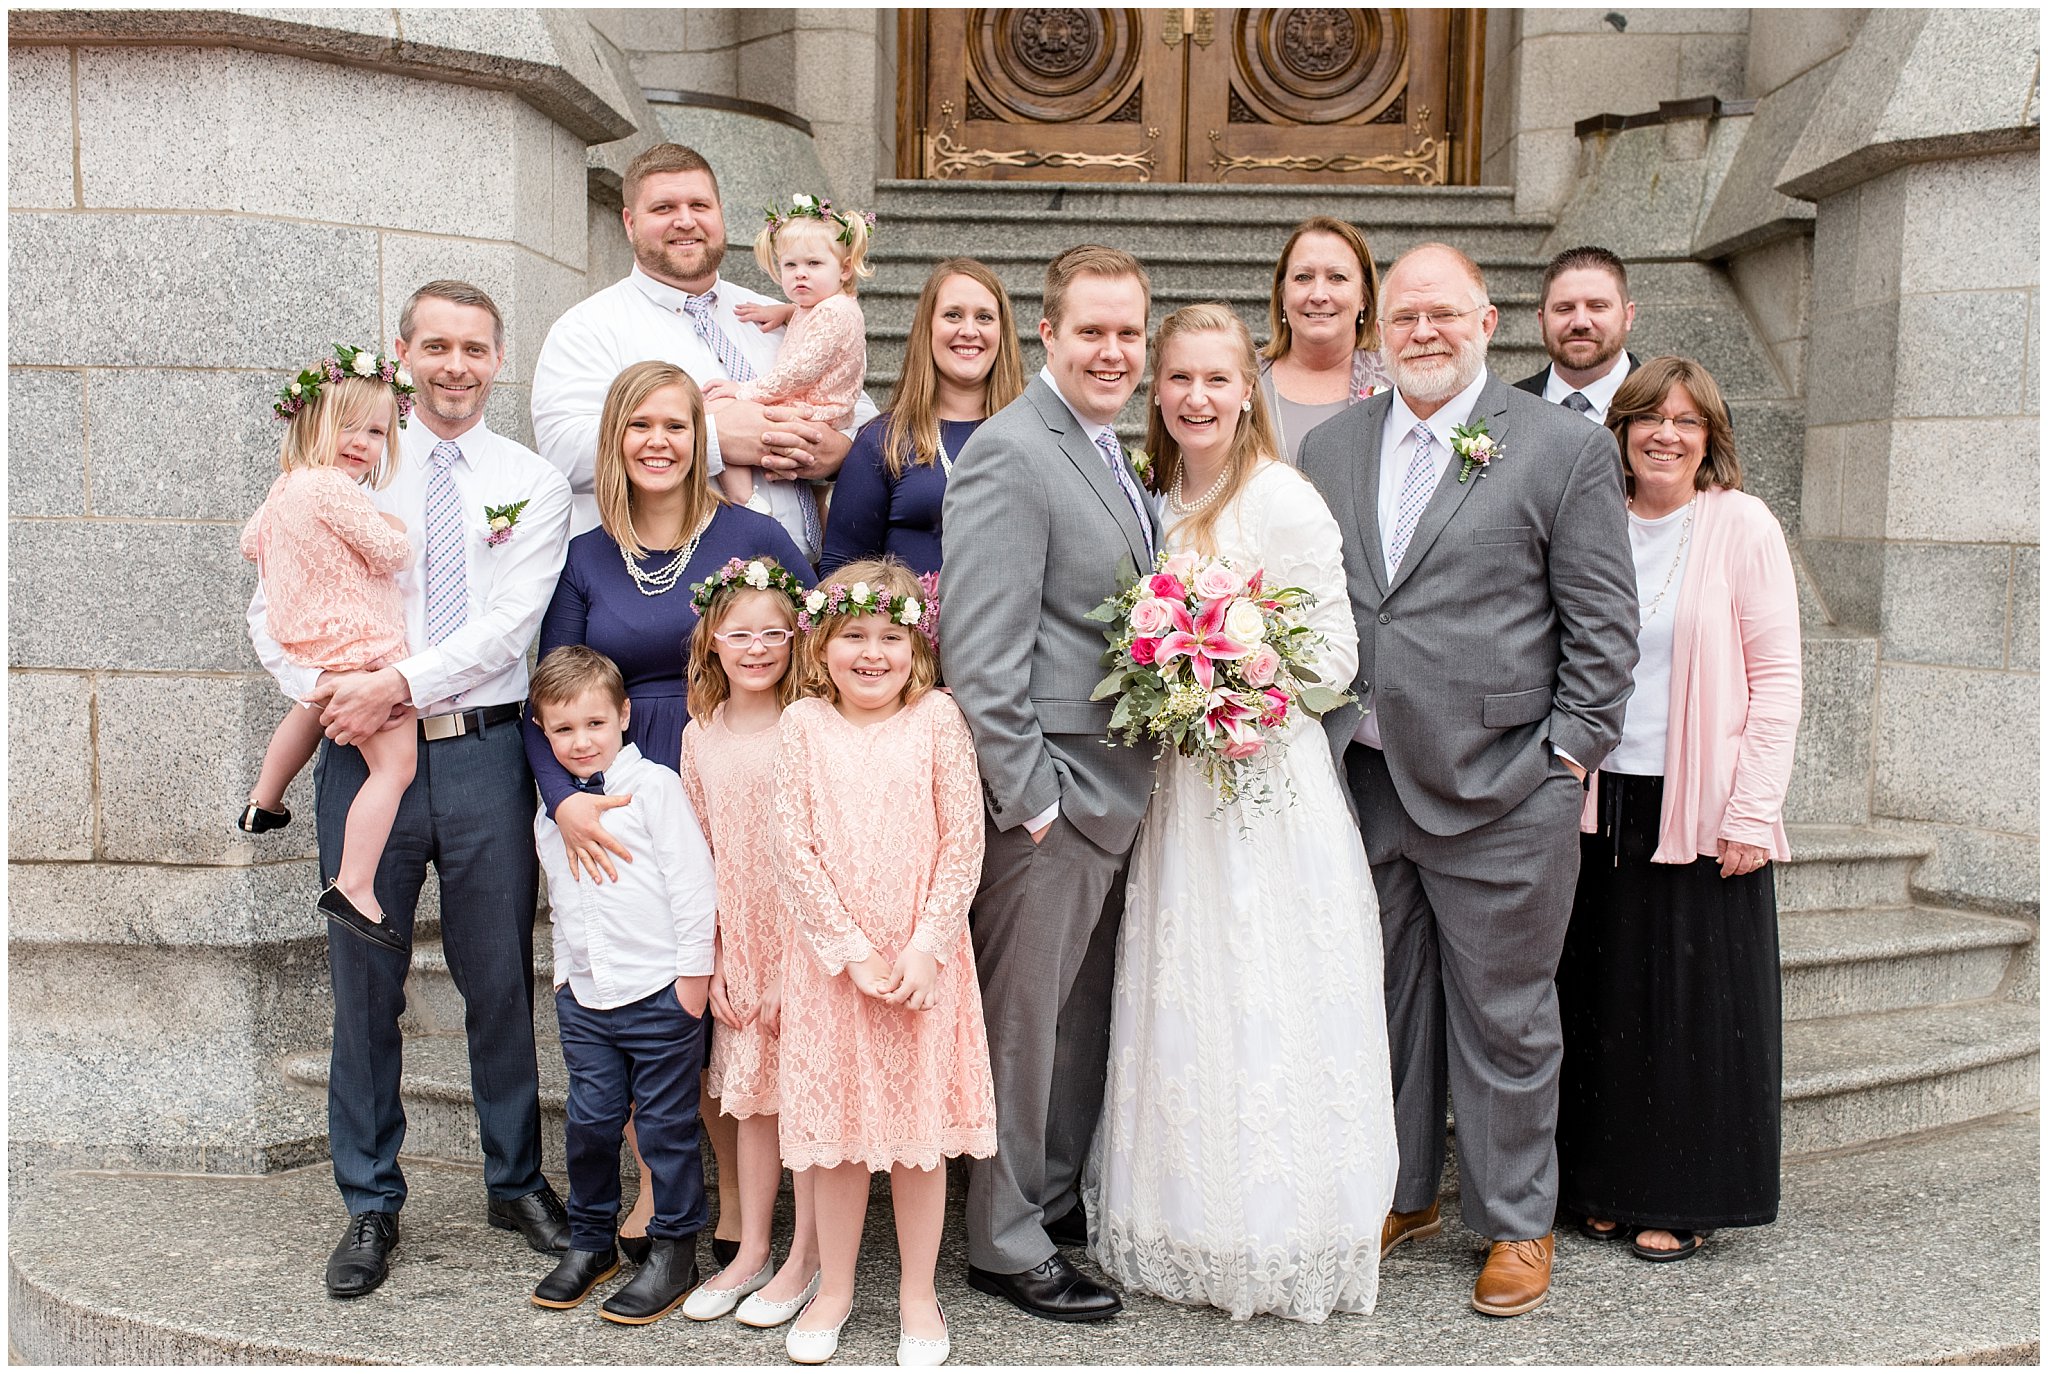 Salt Lake temple family group pictures | spring utah wedding | rose, raspberry, and navy wedding